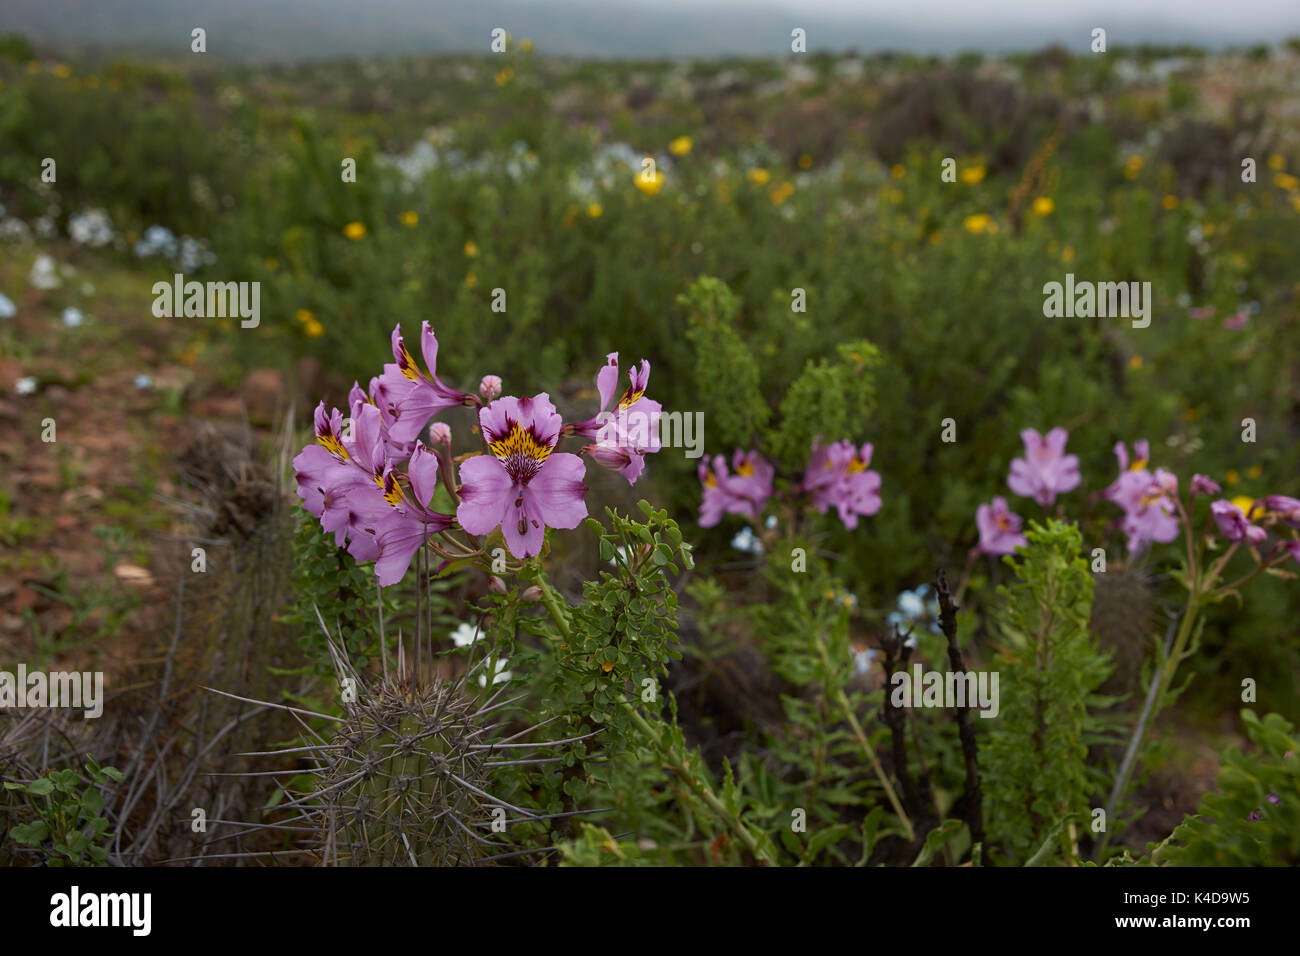 Rare native plant (Alstroemeria philippii) flowering in the Atacama Desert amongst the cacti after rare rain in the Atacama Desert. Stock Photo